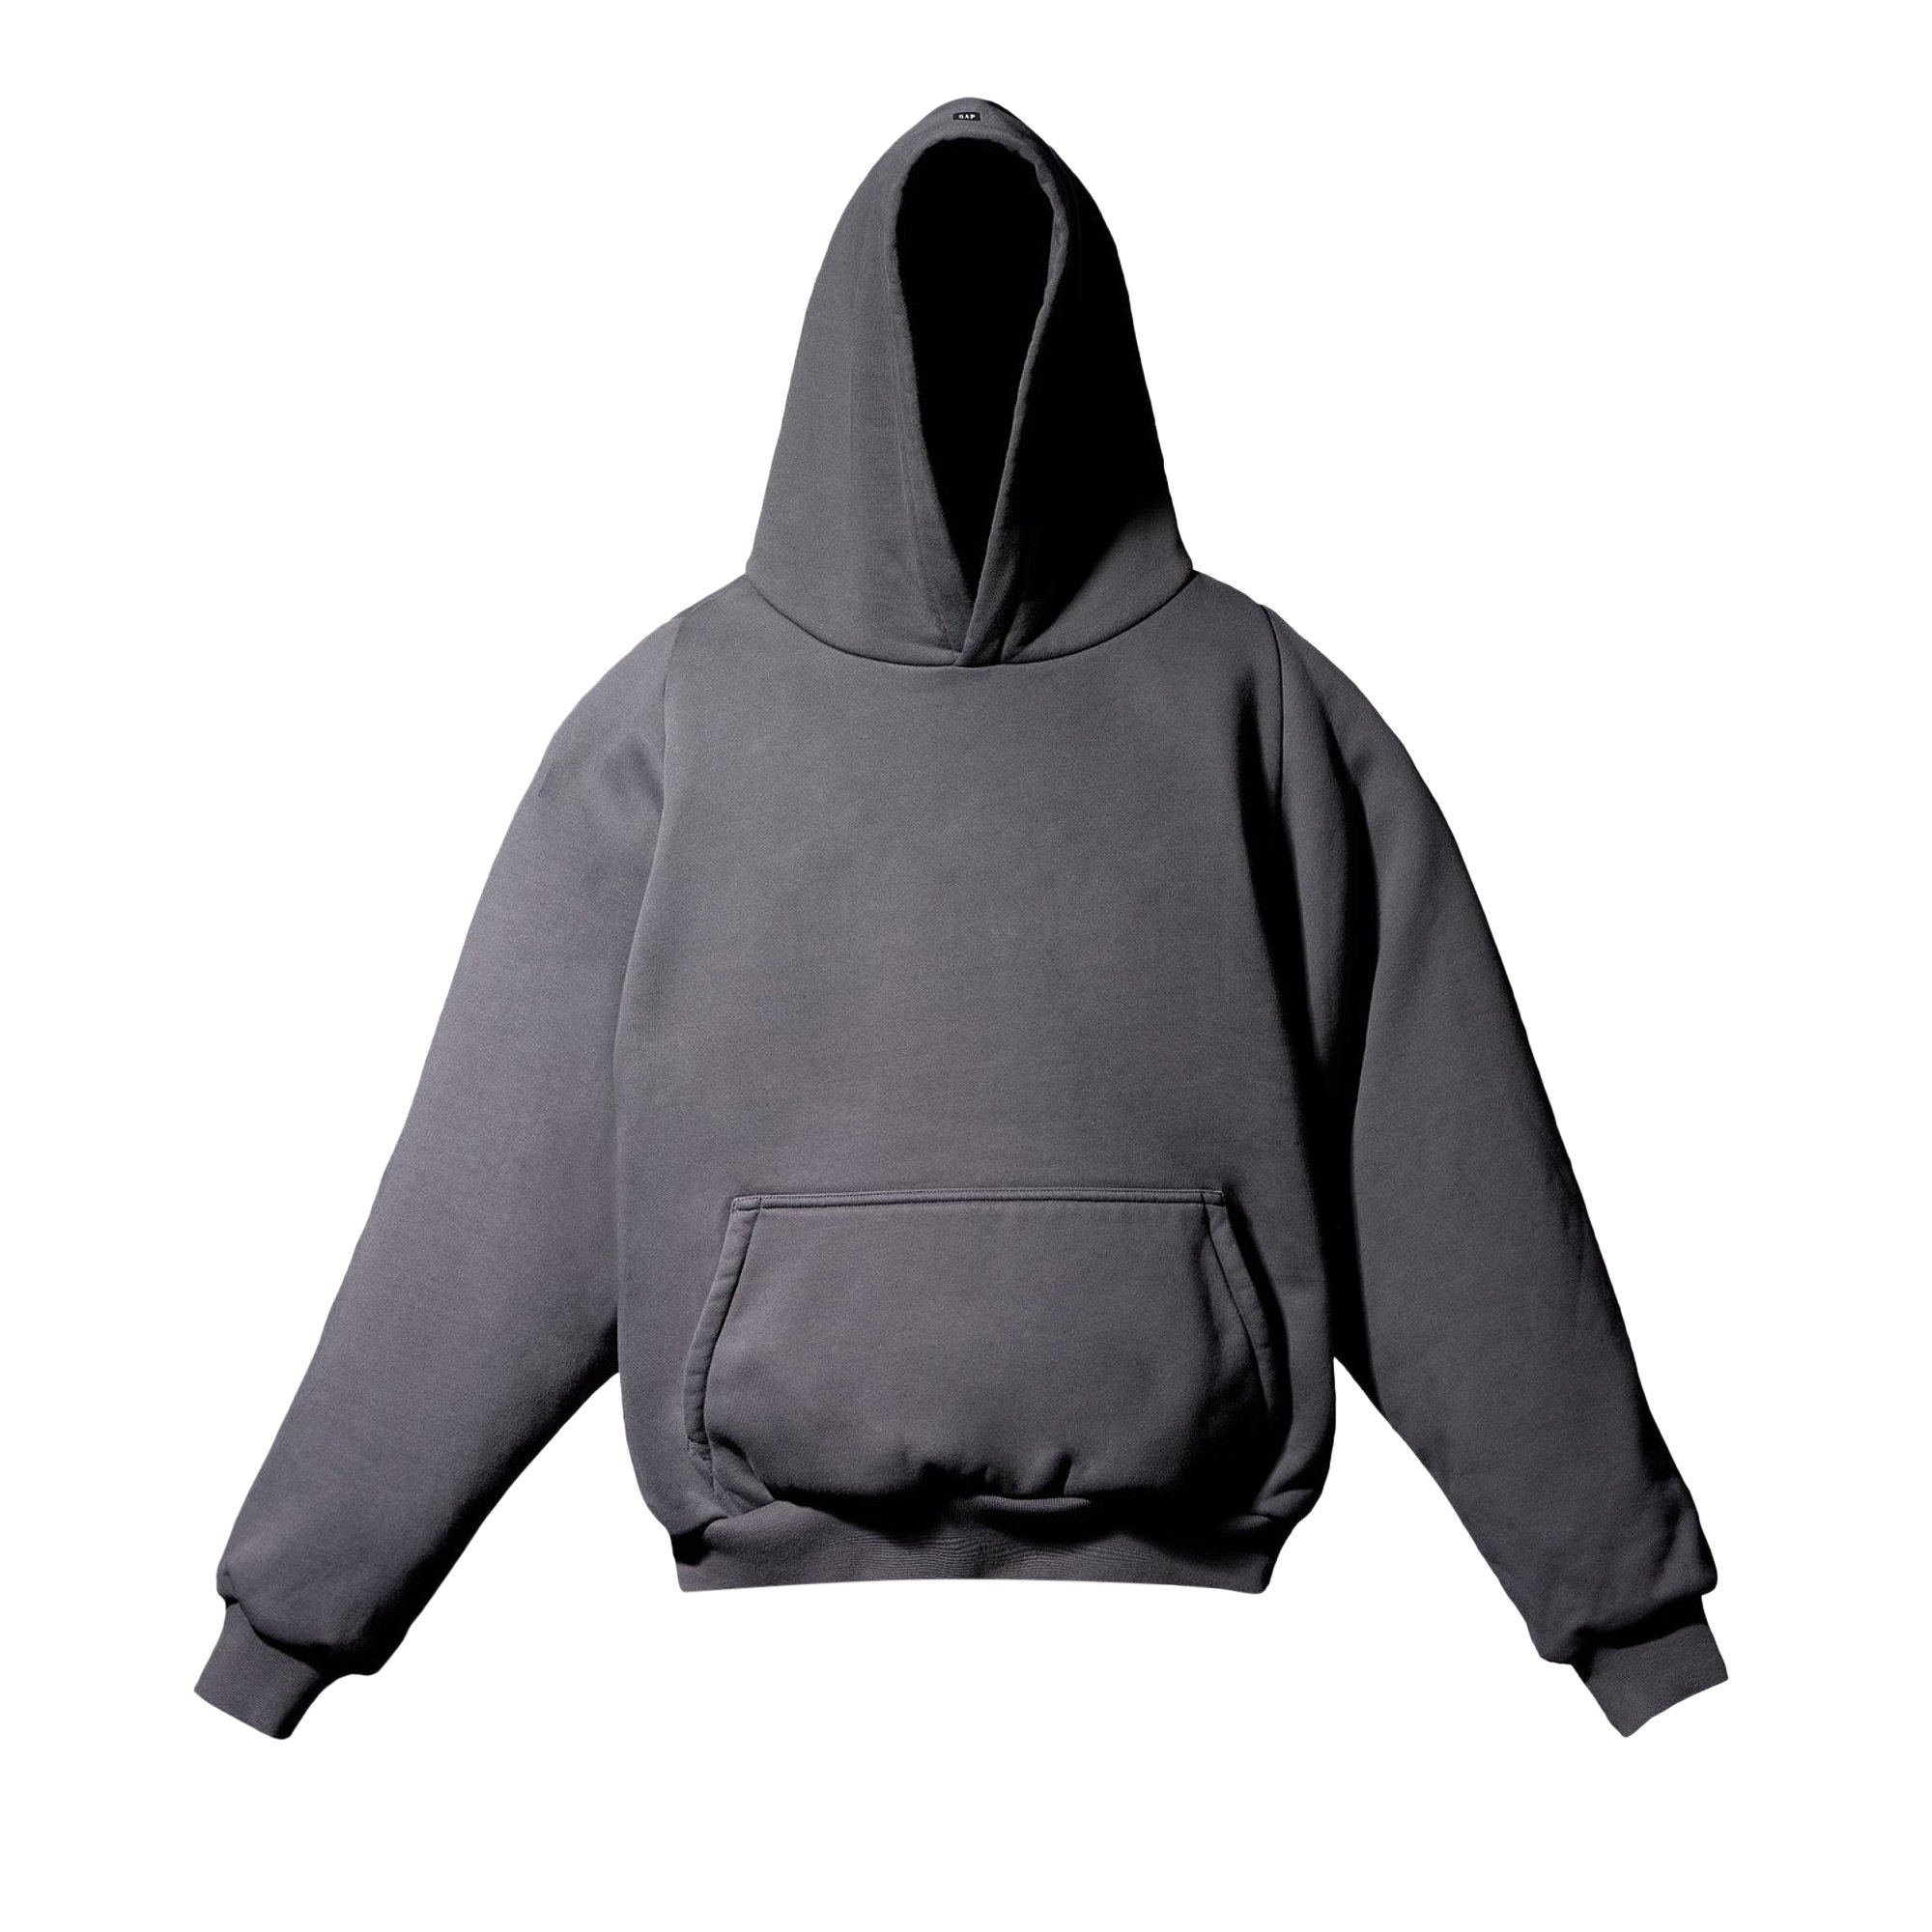 Yeezy Gap Engineered by Balenciaga Logo Shrunken Hoodie 'Black' | GOAT